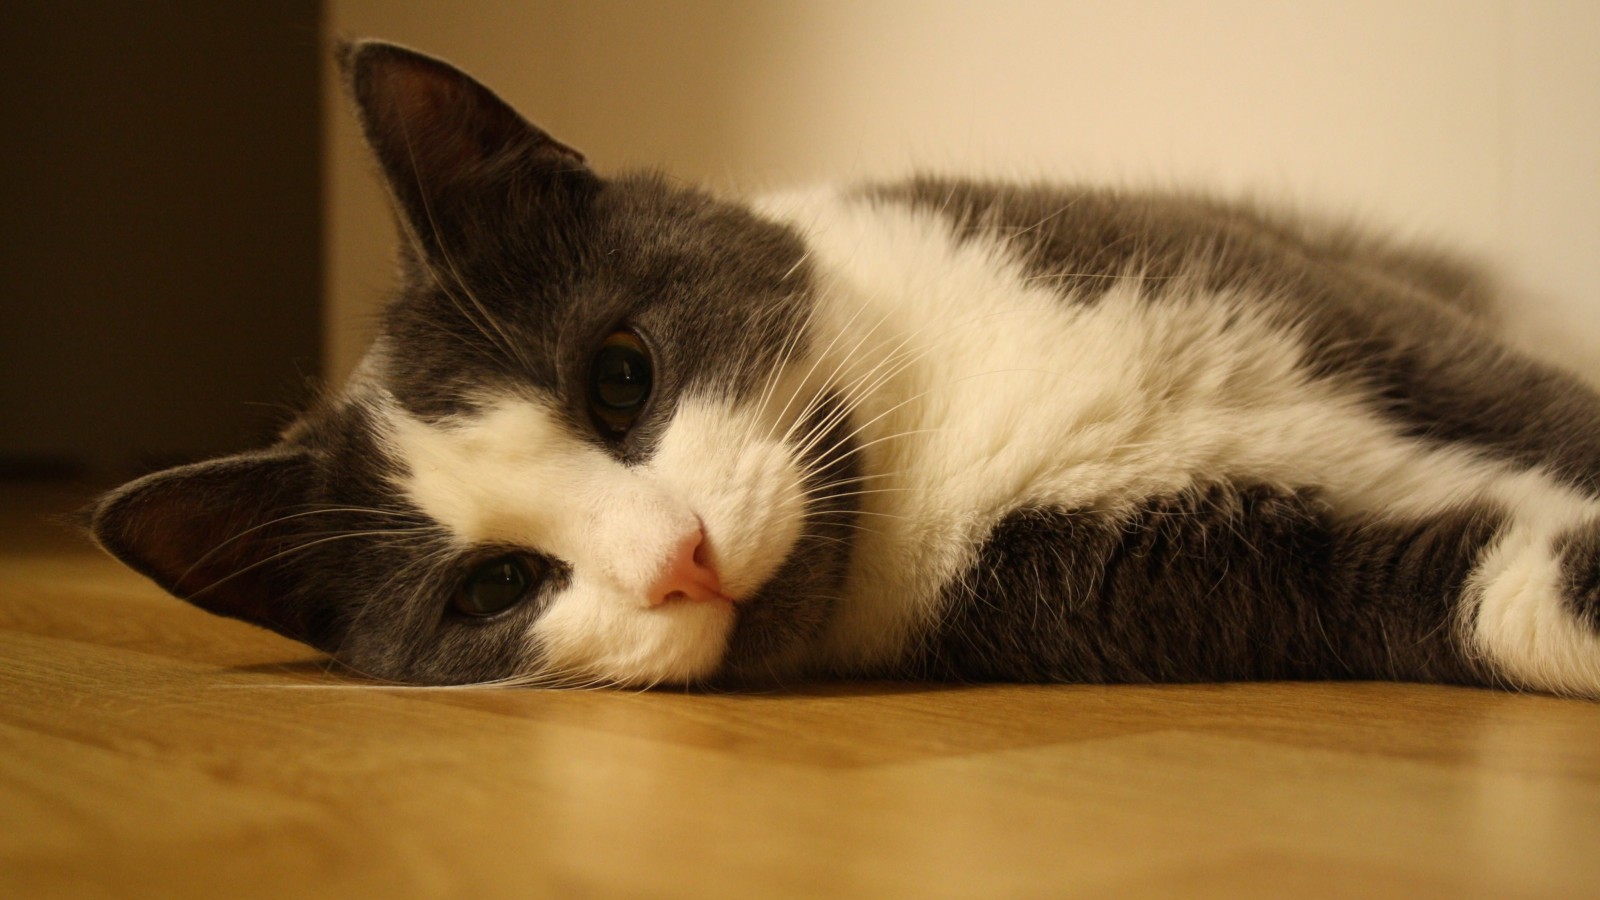 Sweet Cat Lying On The Floor Wallpaper for Desktop 1600x900